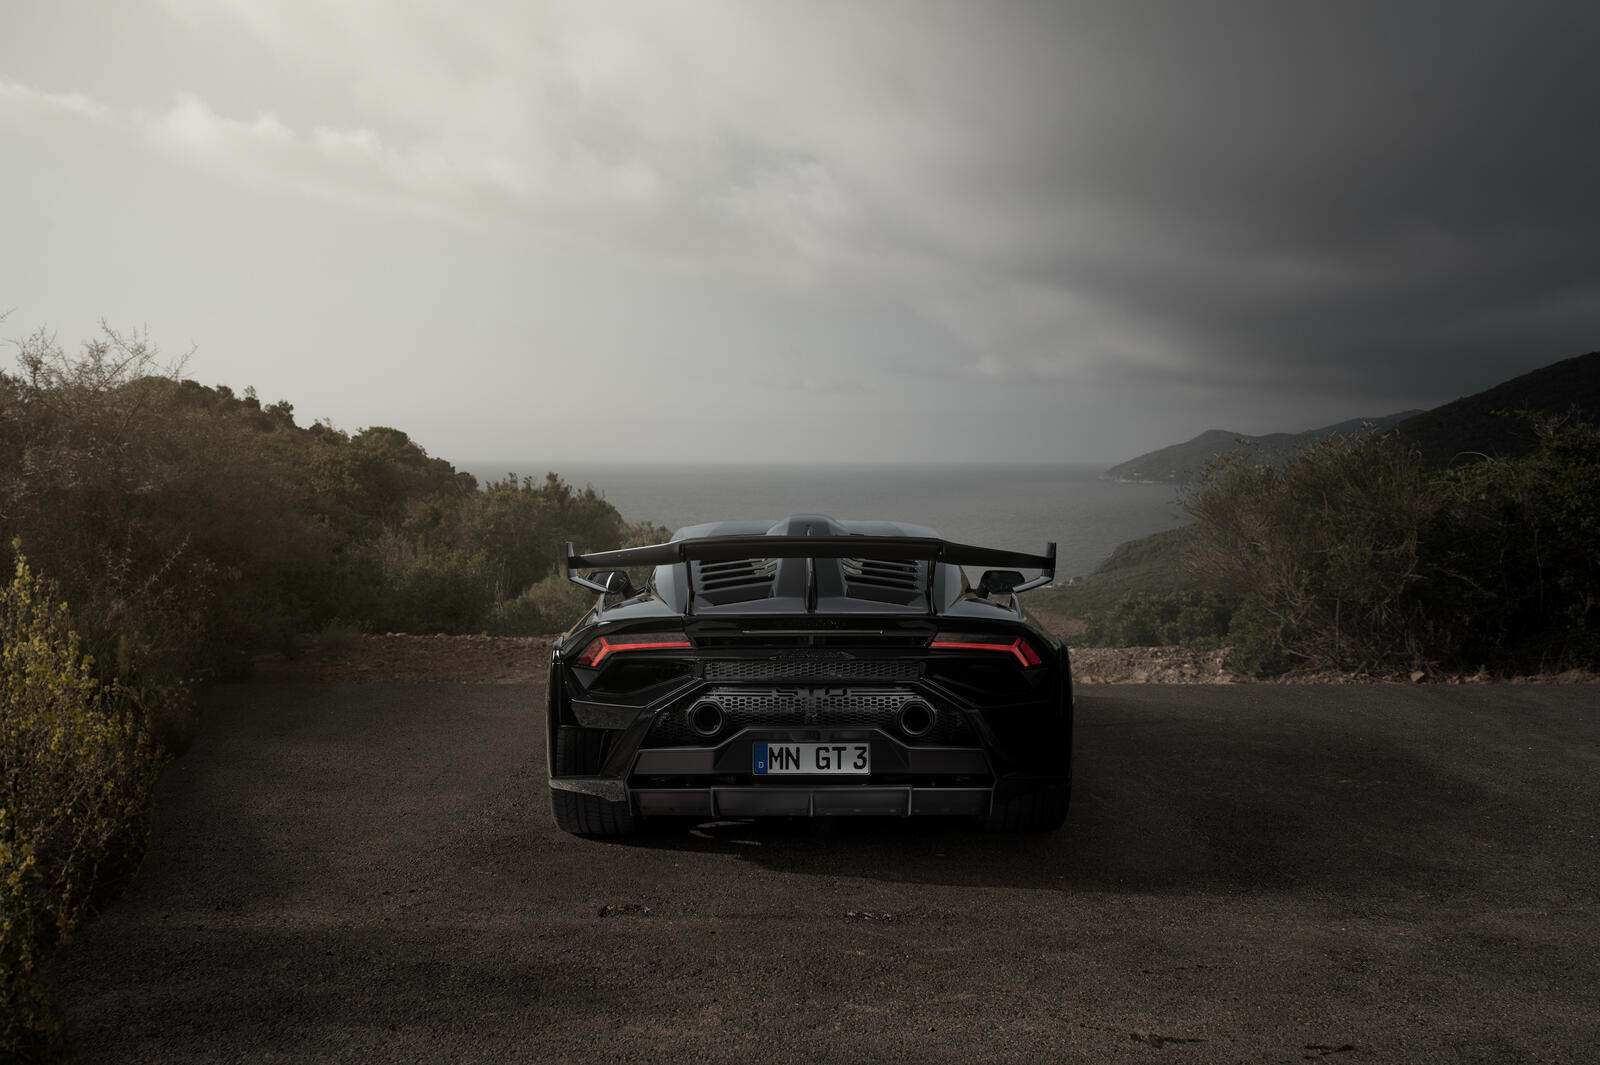 Free photo Black Lamborghini Huracan STO on a country road